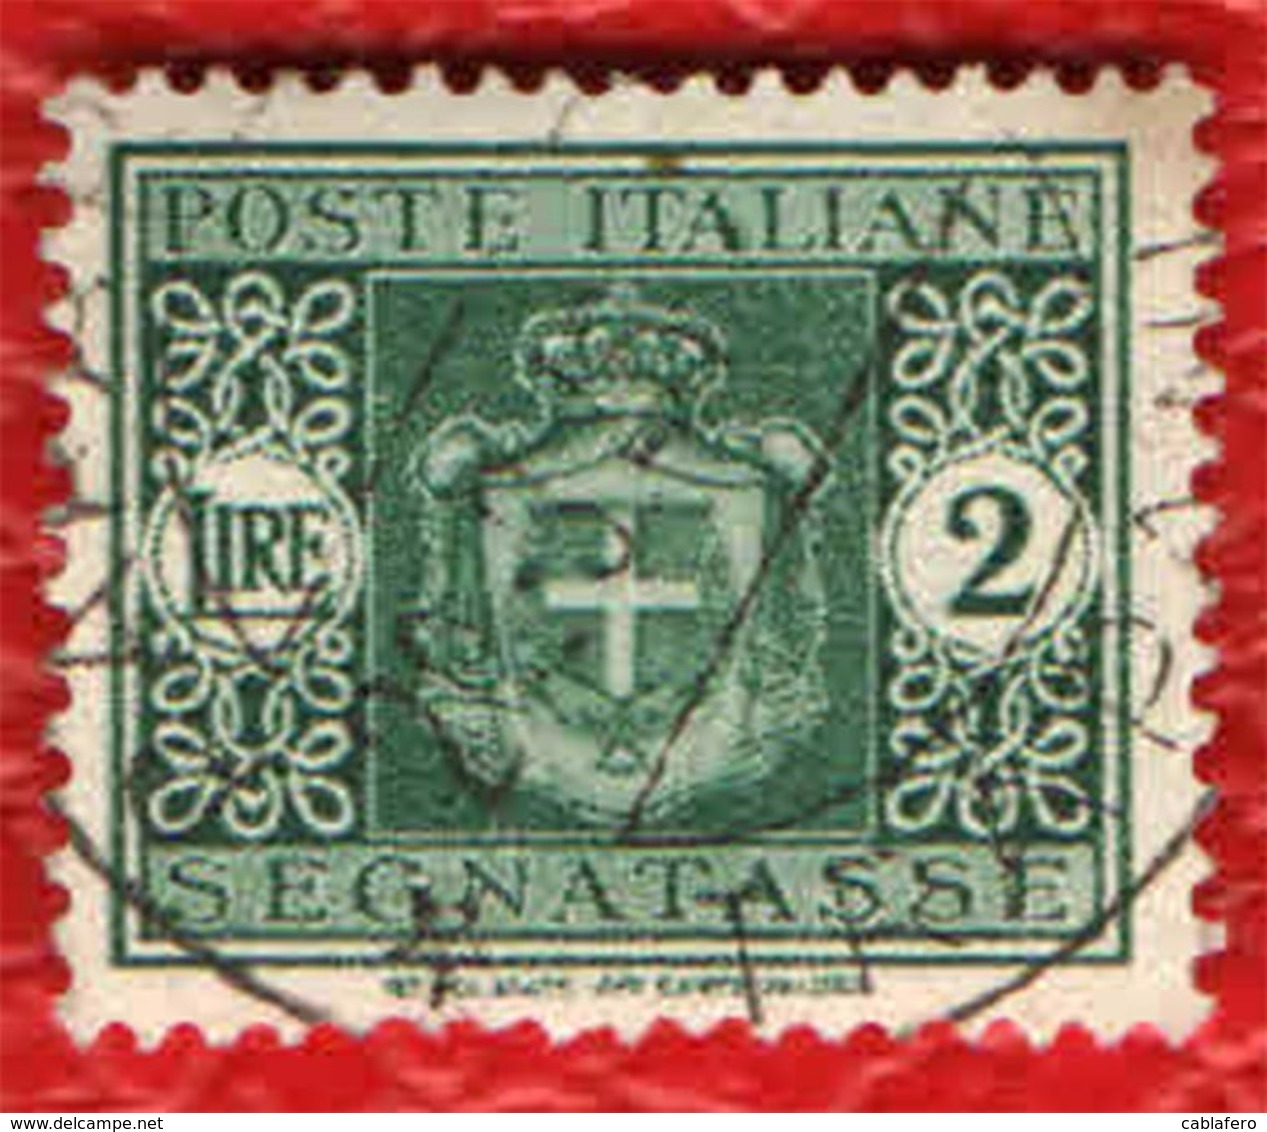 ITALIA - LUOGOTENENZA - 1945 - SEGNATASSE - FILIGRANA RUOTA - VALORE DA 2 LIRE - USATO - Taxe